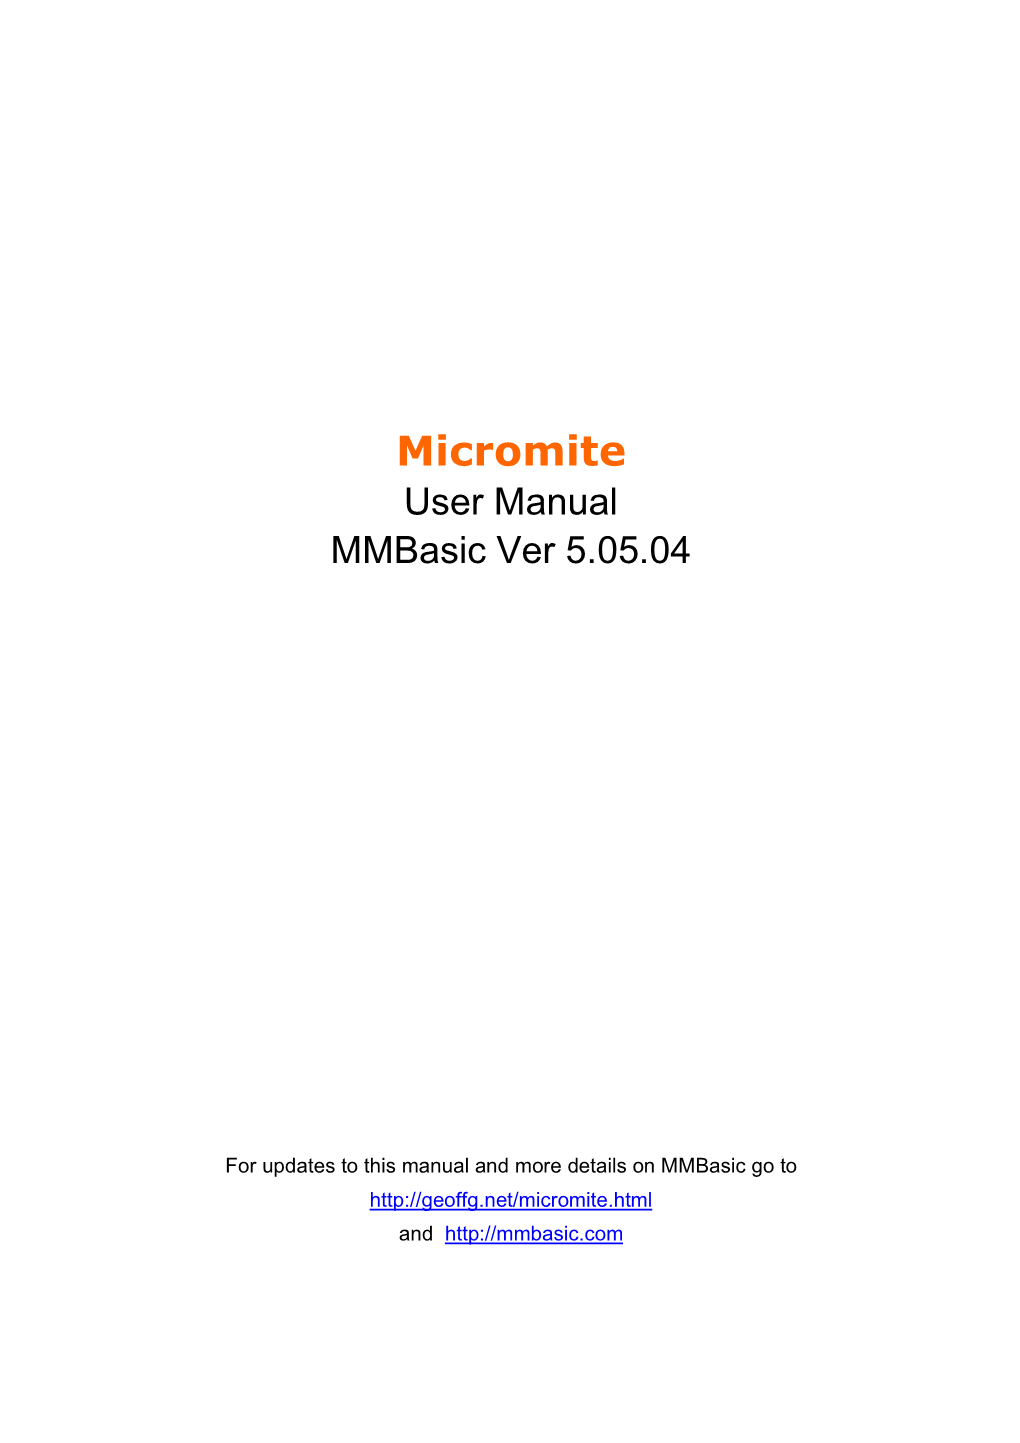 Micromite User Manual Mmbasic Ver 5.05.04